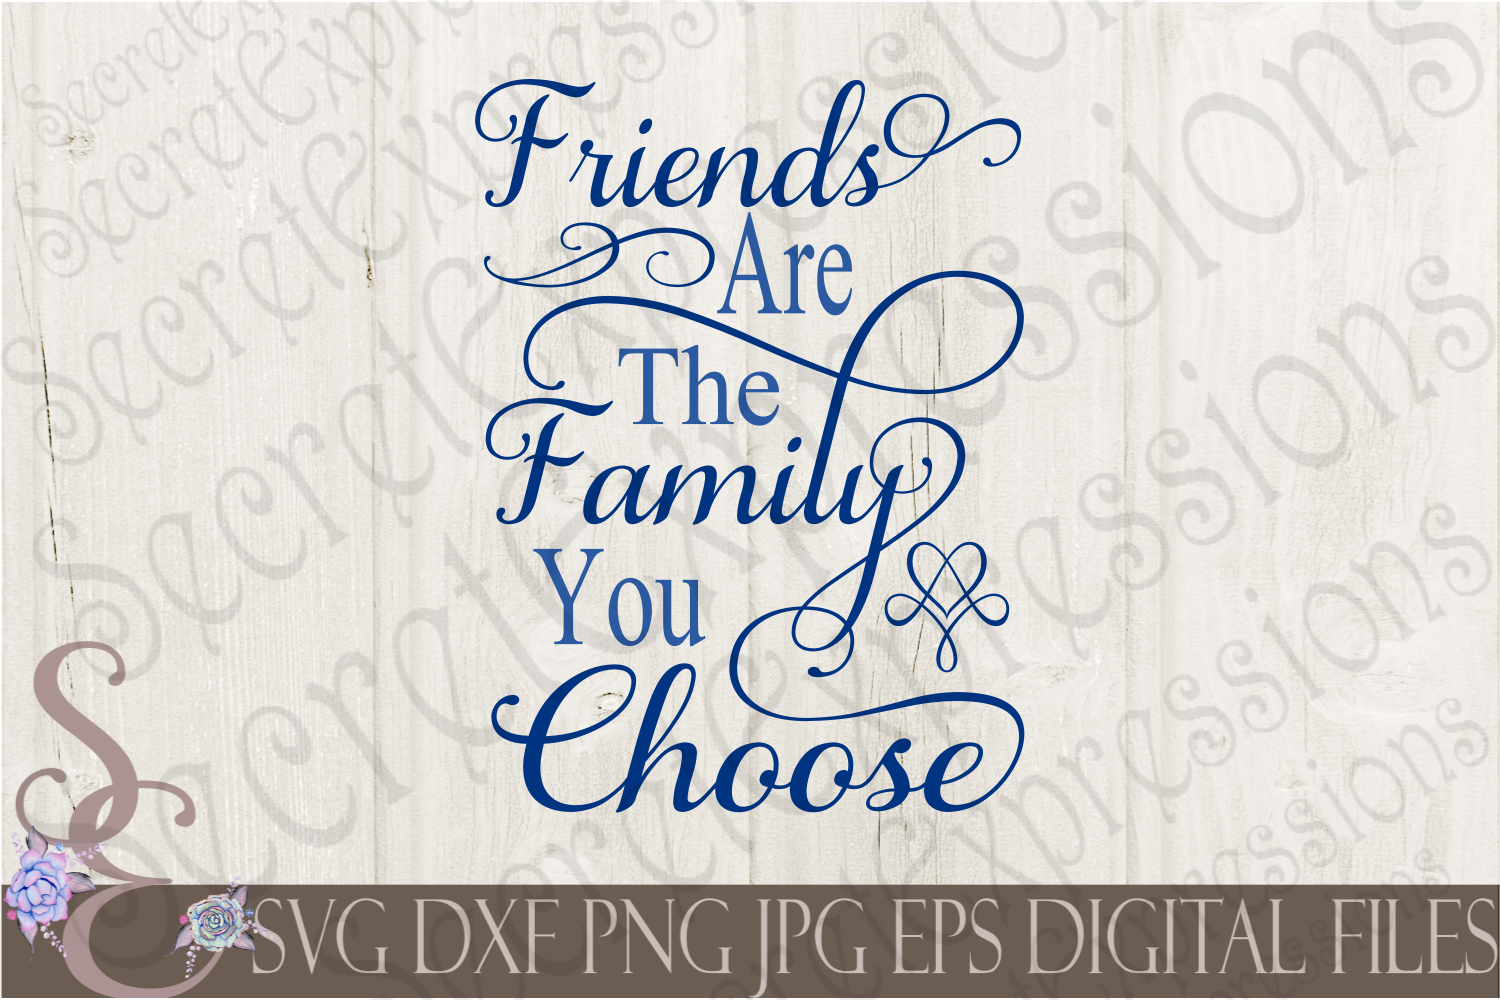 Friends and Friendship SVG Bundle (117433) | SVGs | Design Bundles